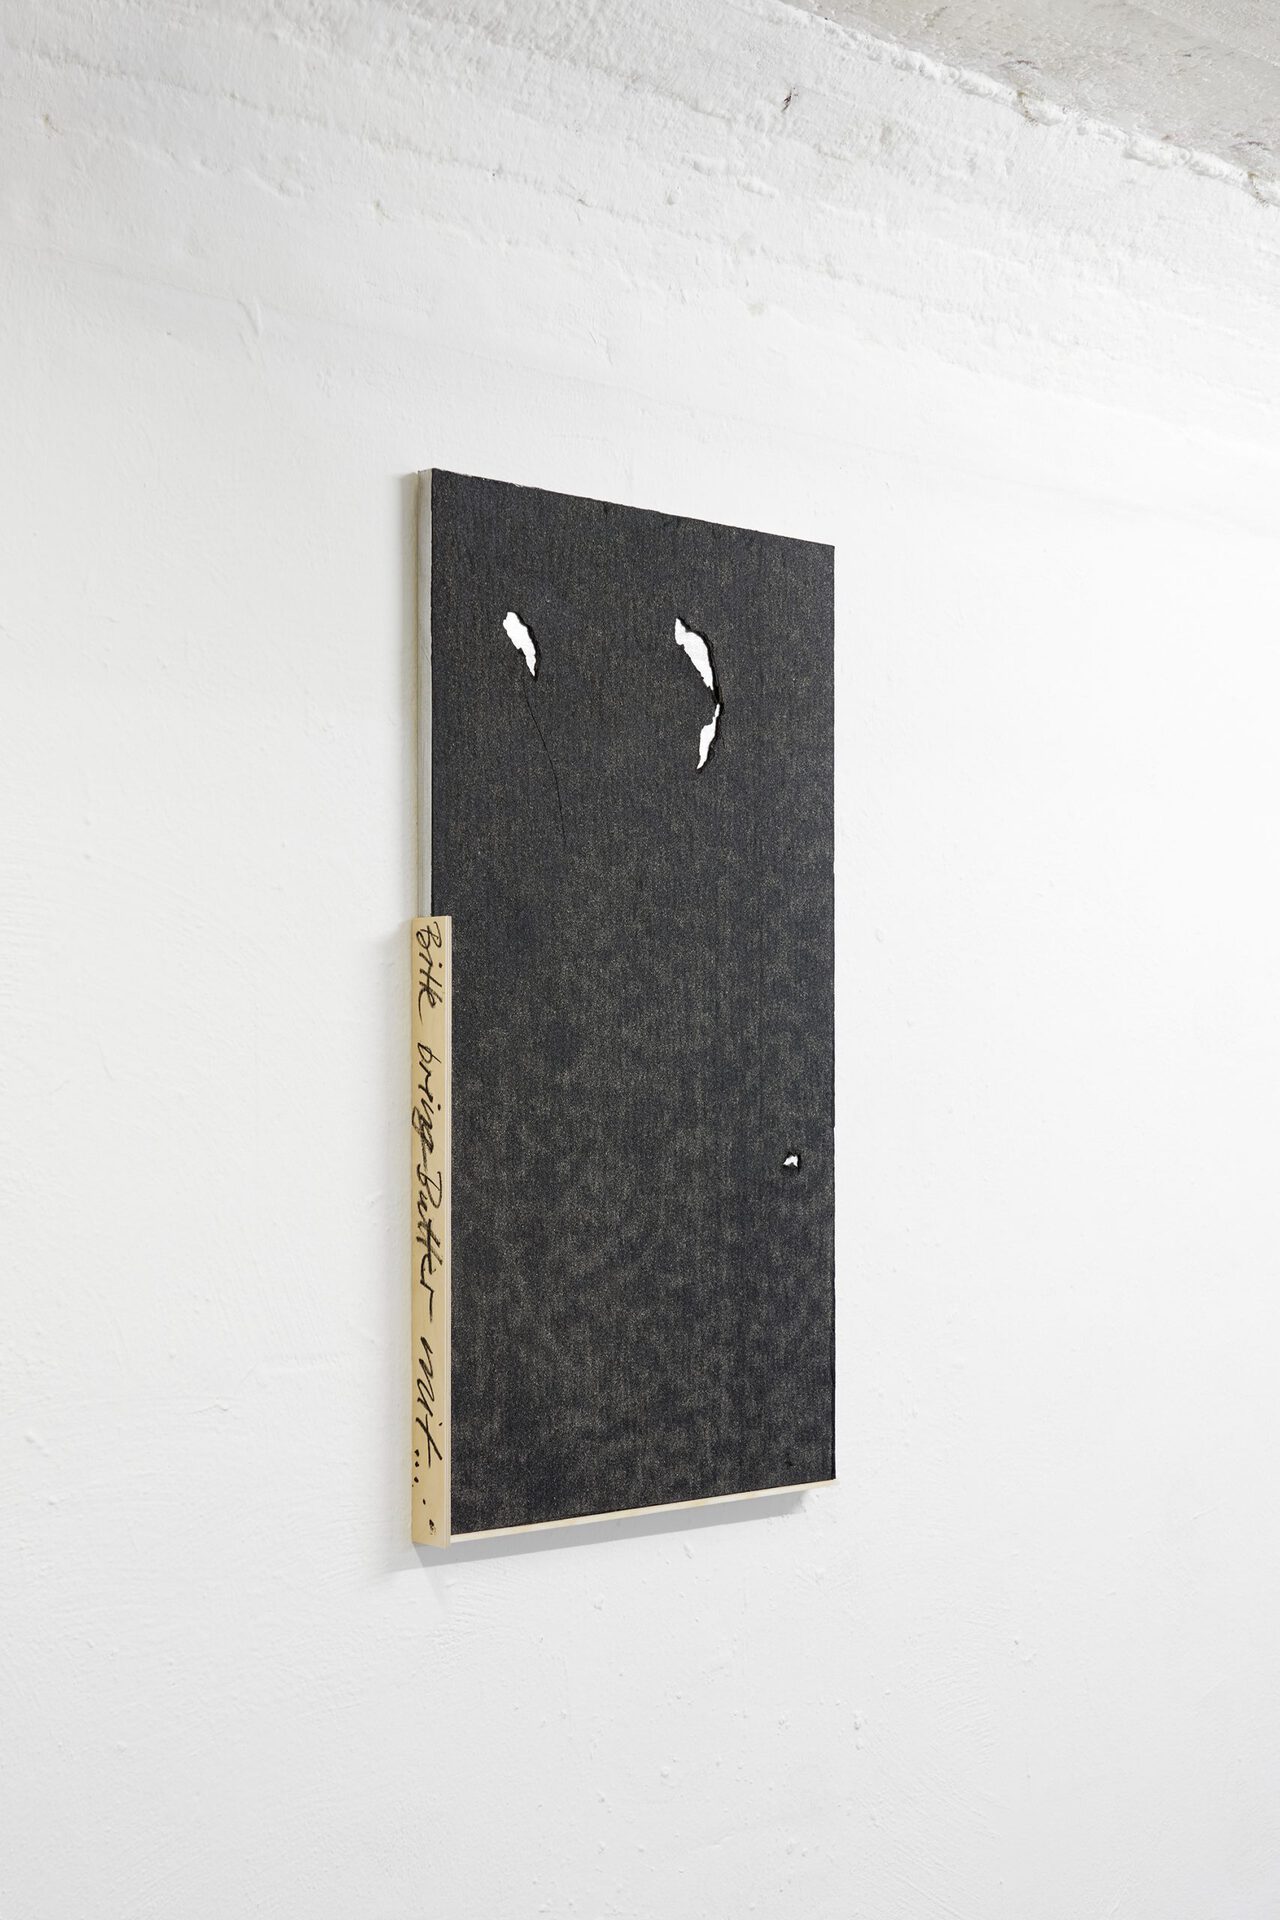 Stephan Idé, Baltische Briefe 7, 2021, multiplex, tar paper, oil paint, spray paint, 94x50 cm